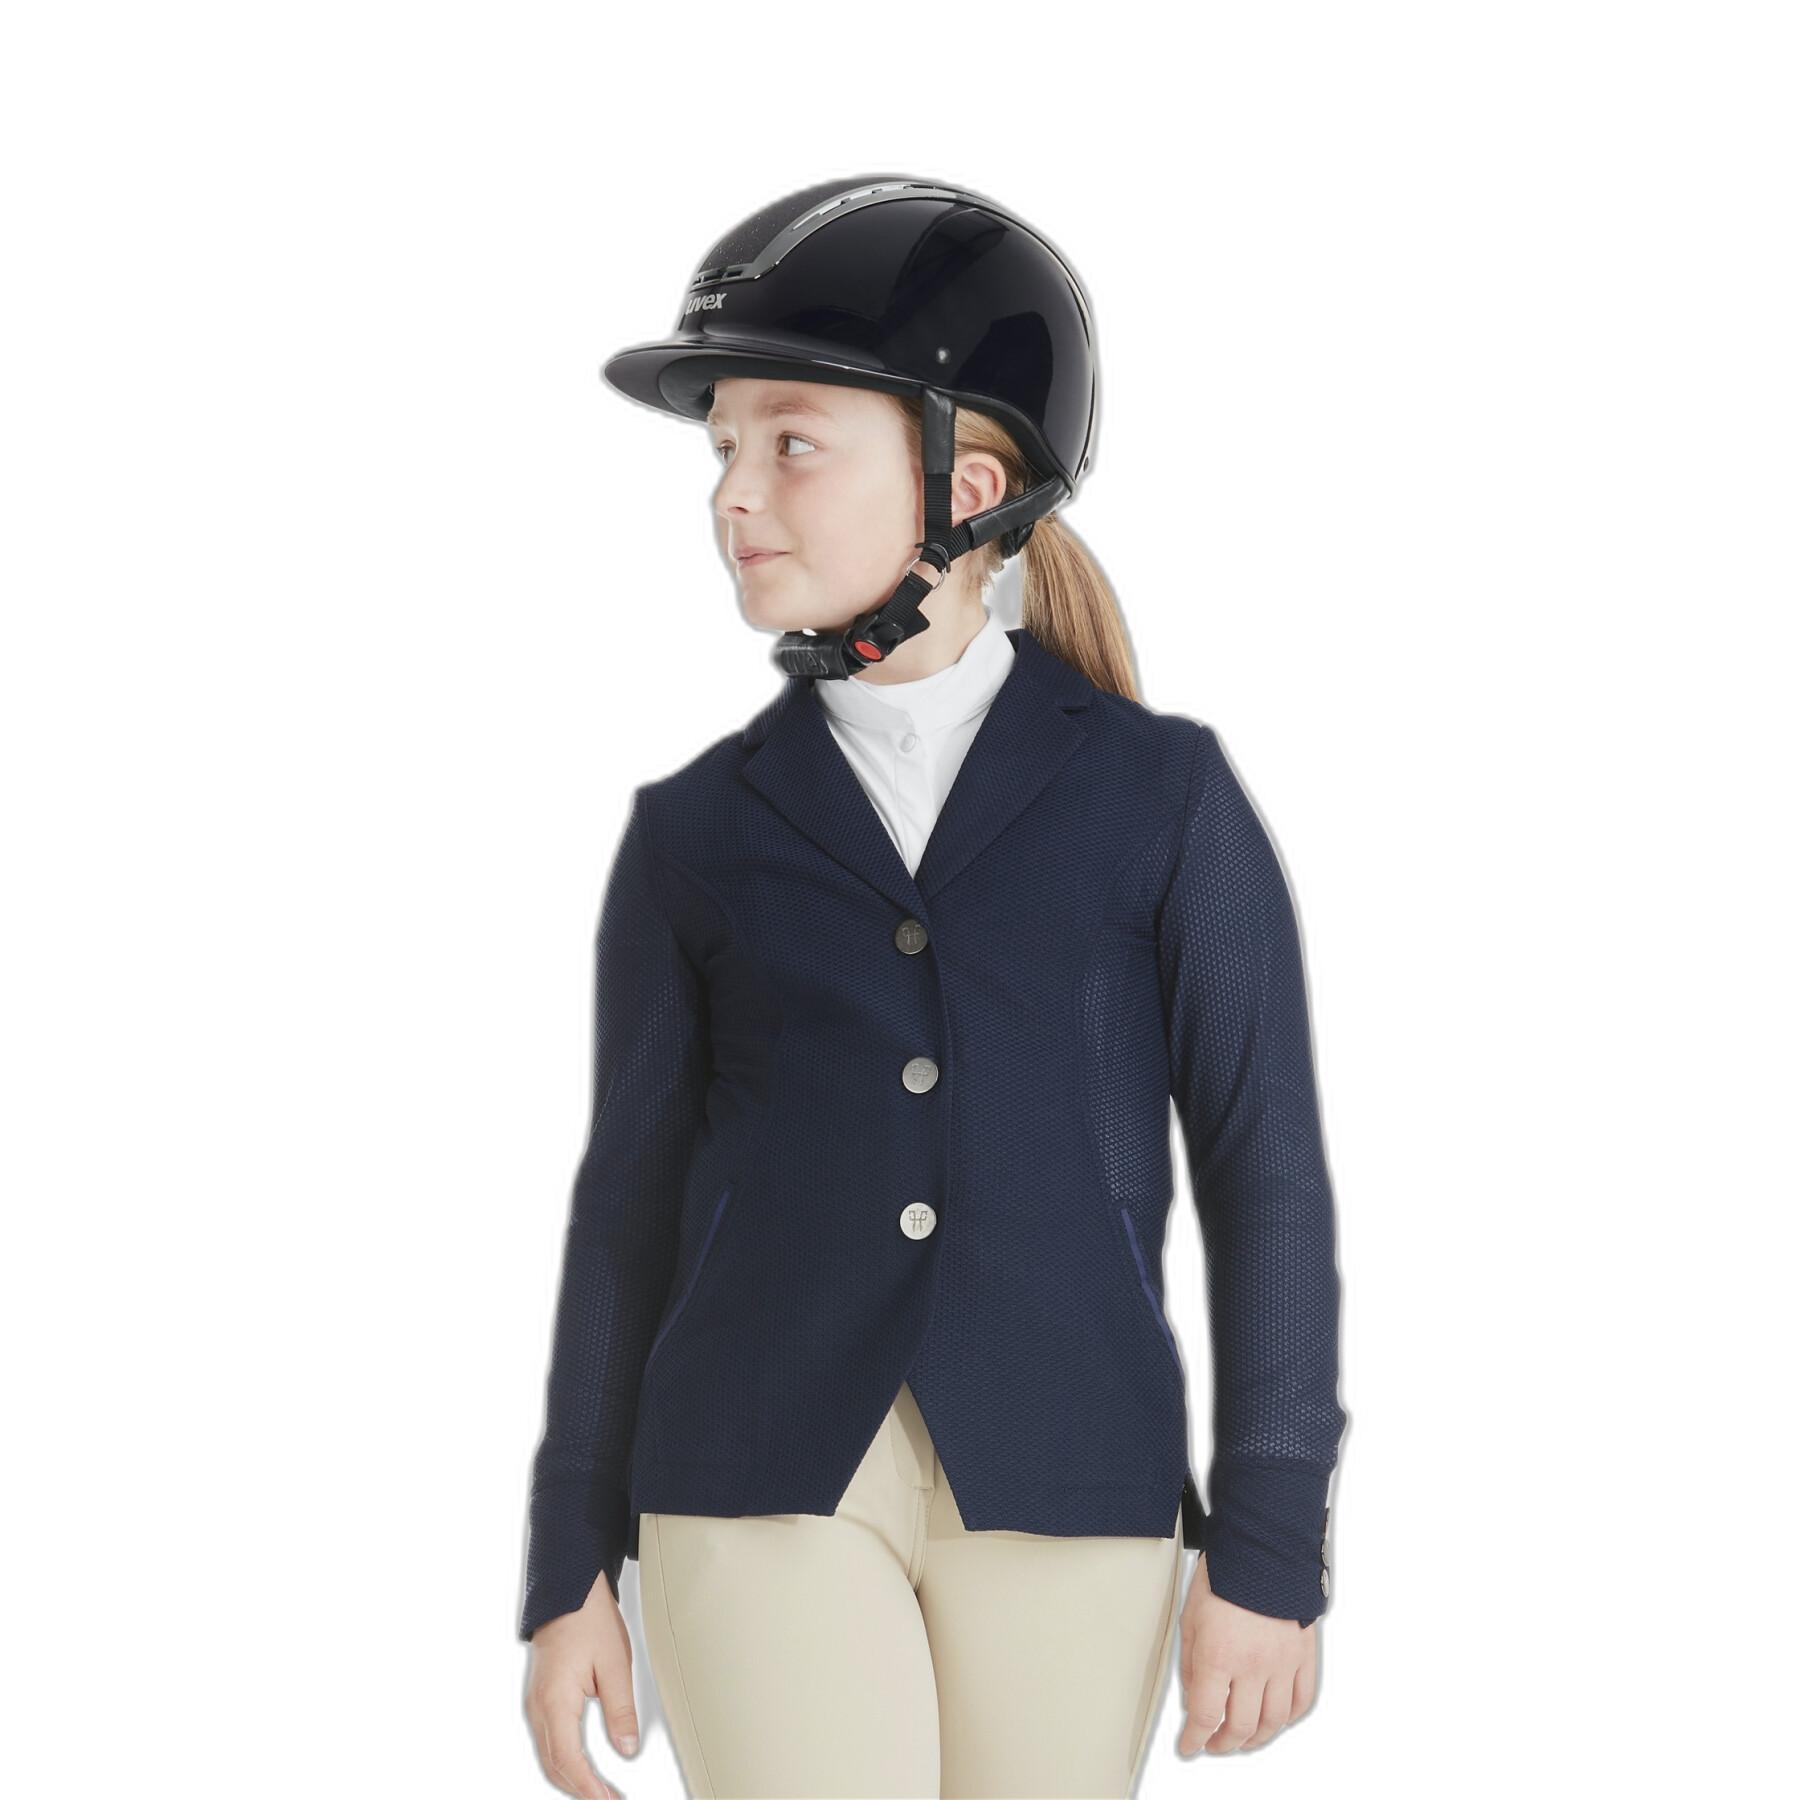 Riding jacket girl Horse Pilot Aeromesh